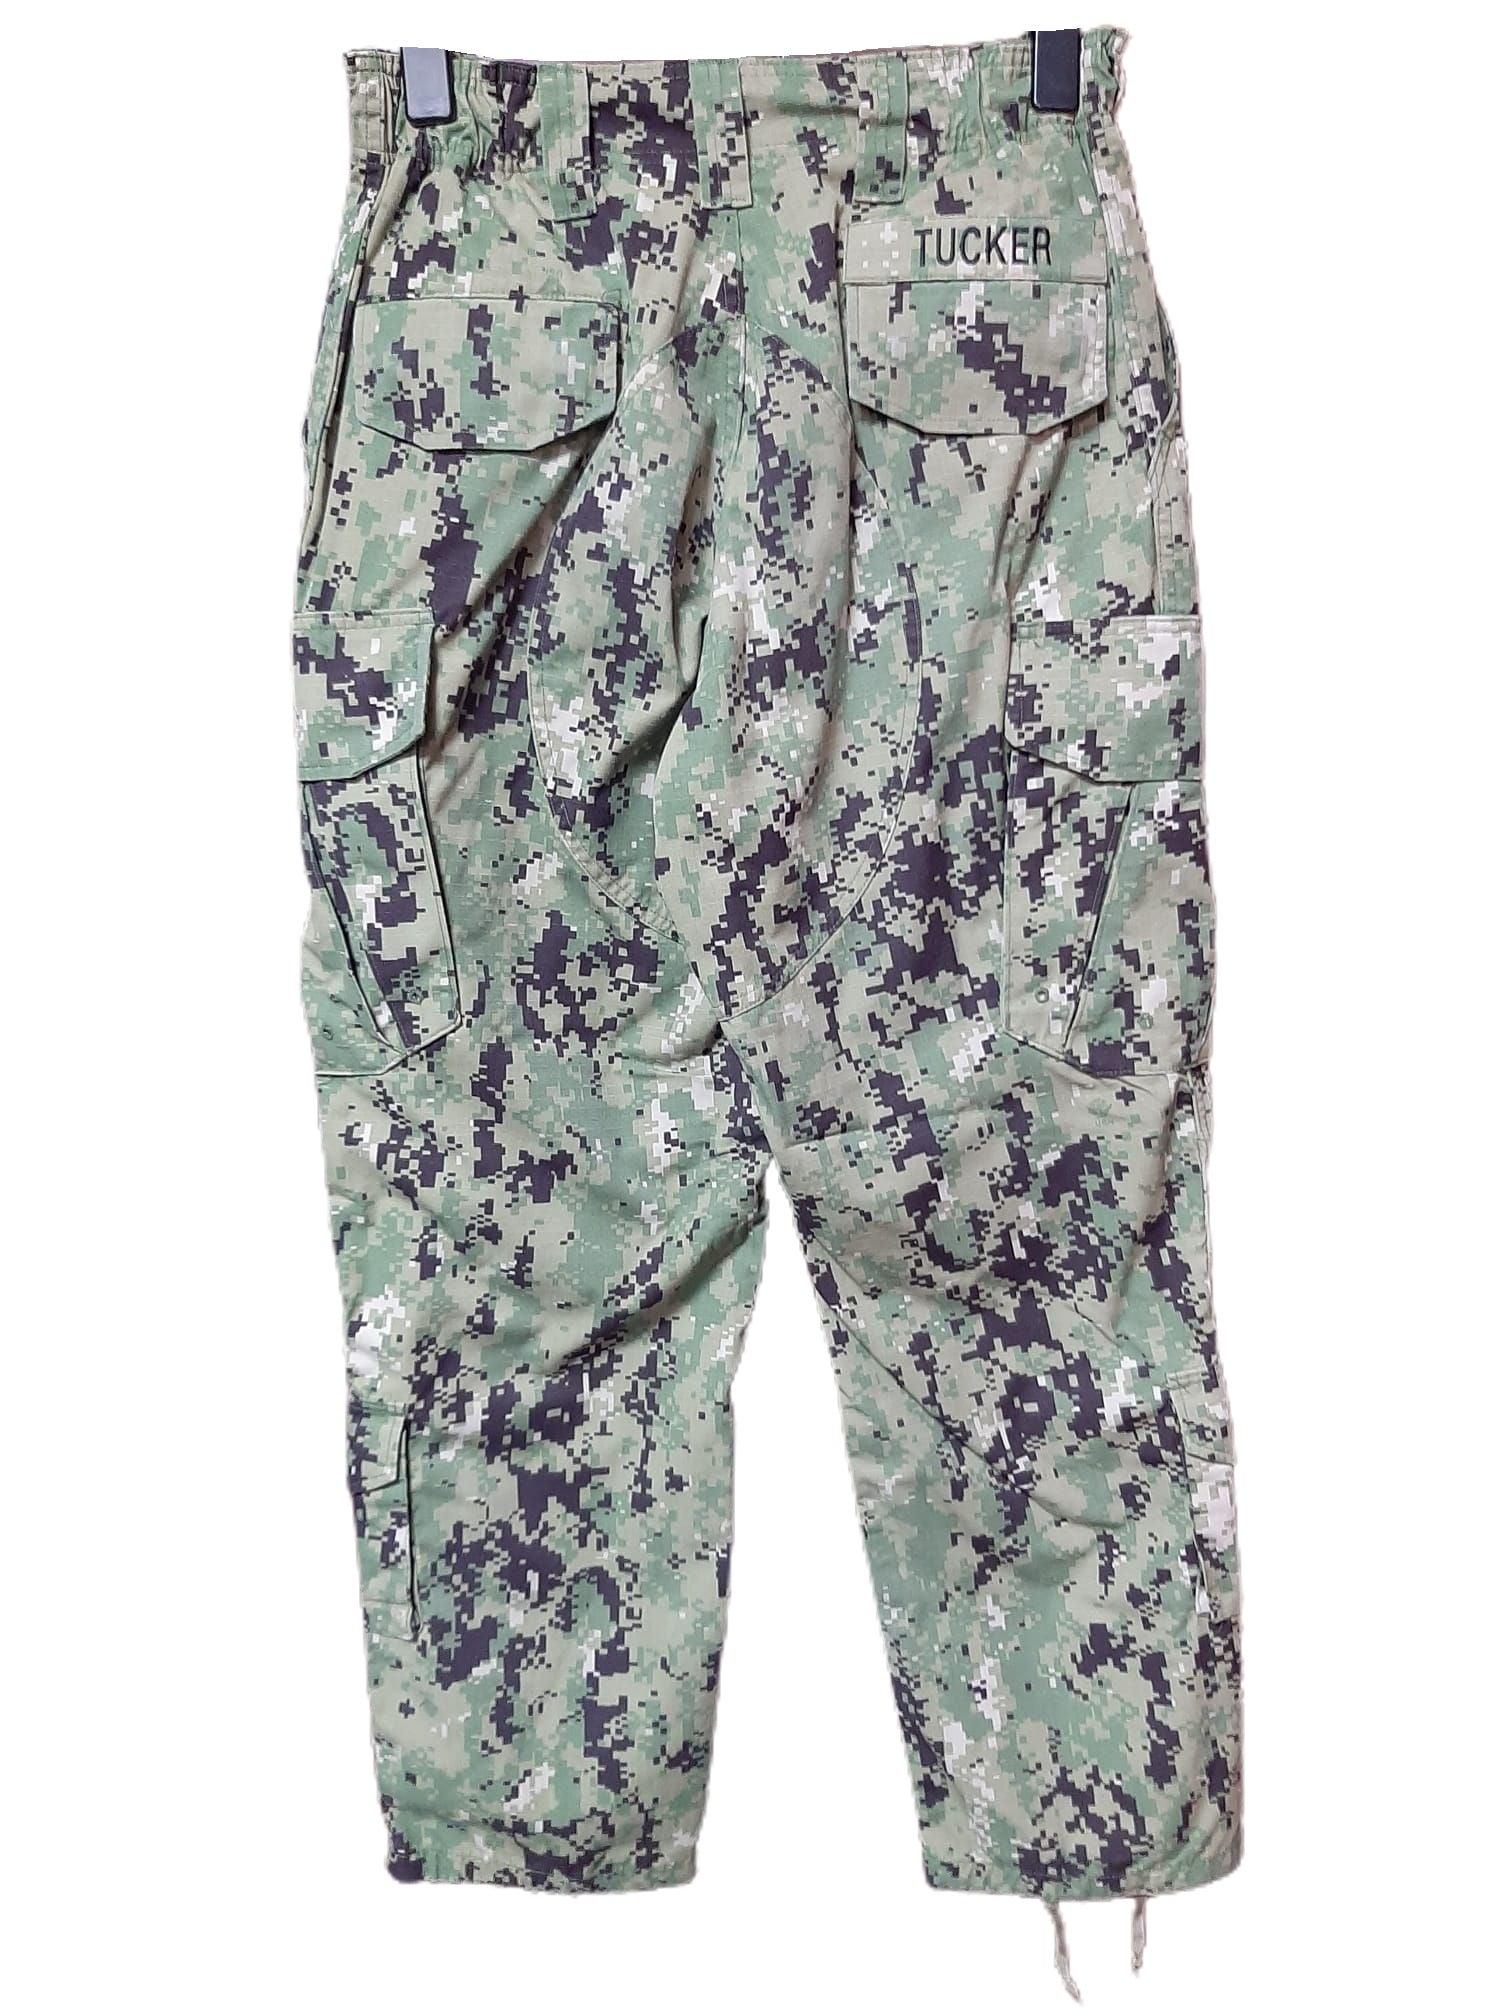 Pantaloni Camuflaj - AOR2 Woodland Digital (SH) - Surplus Militar